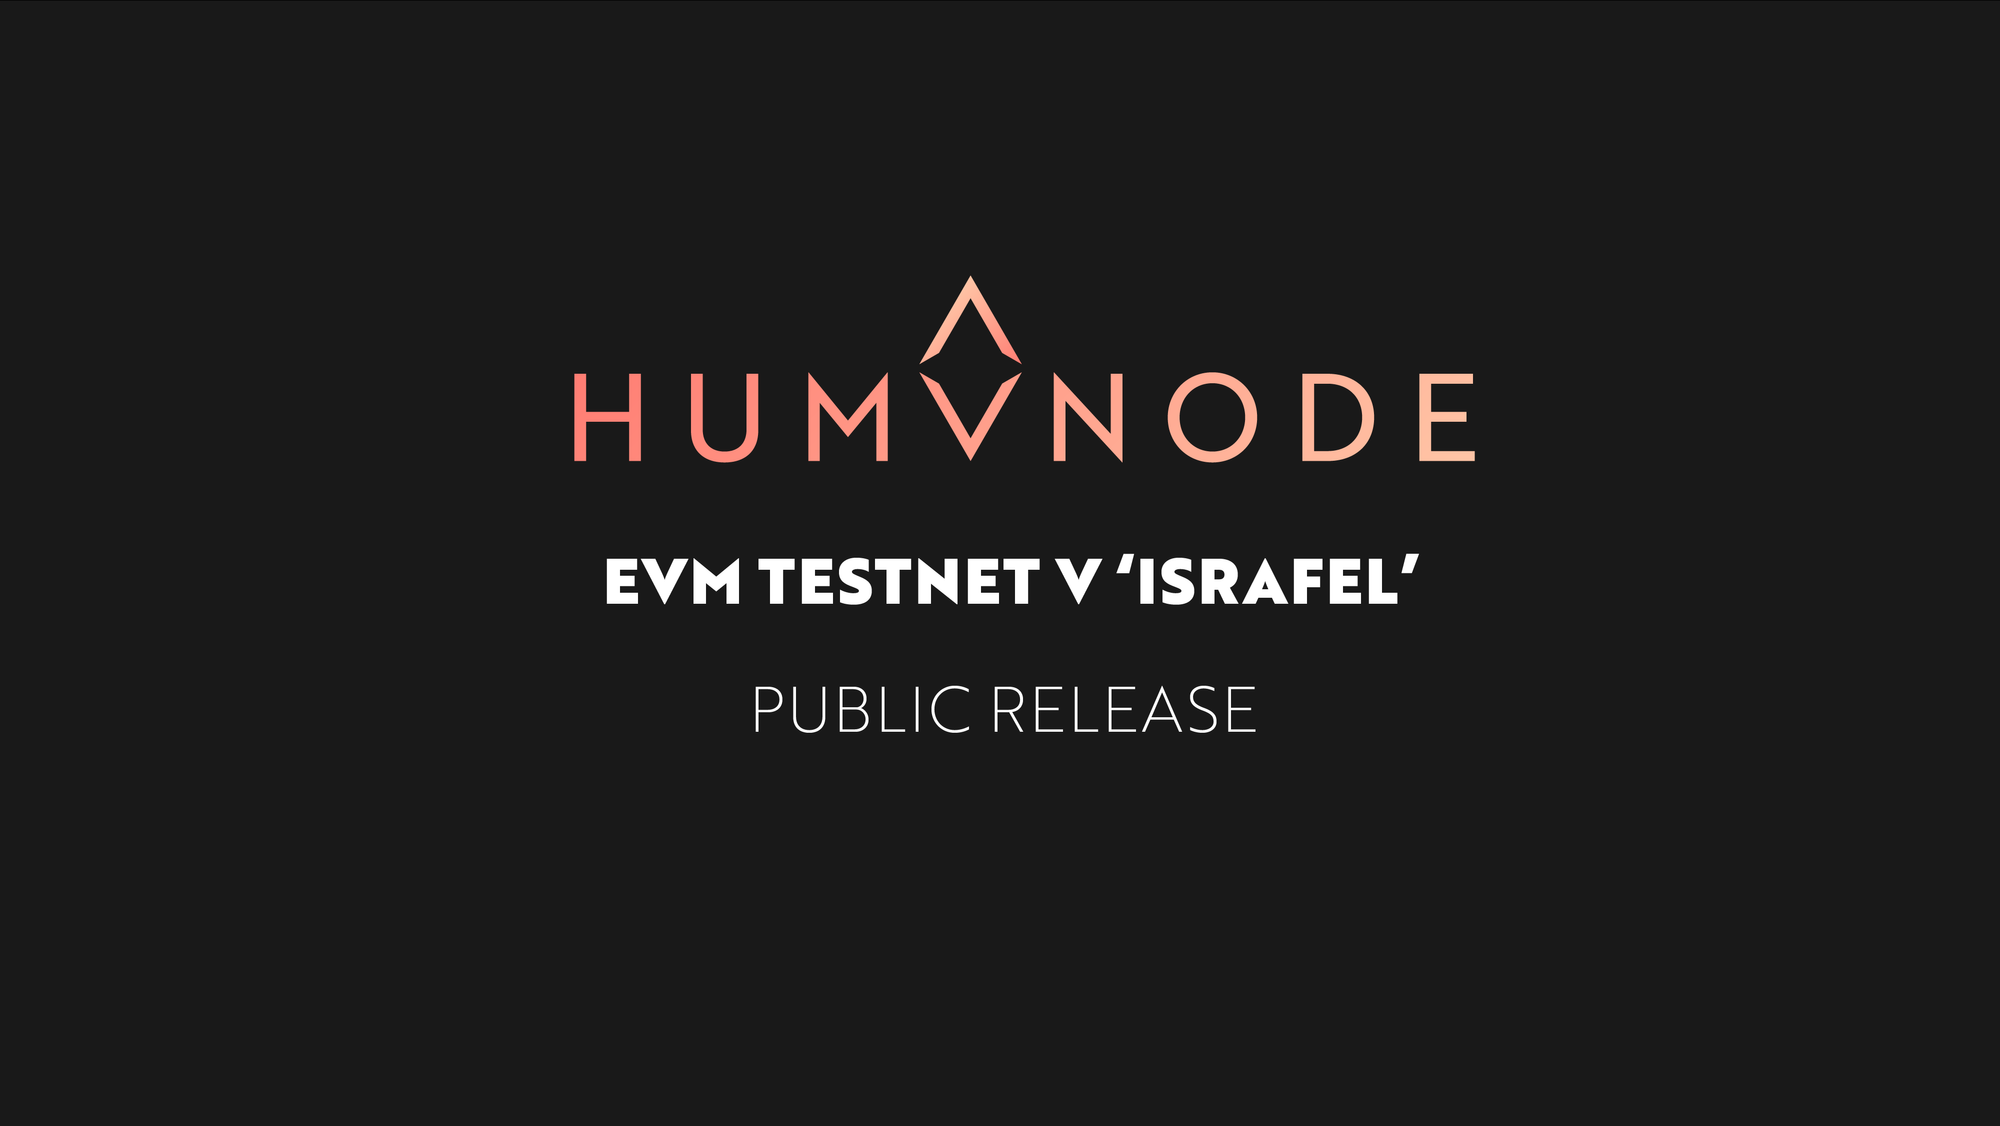 Humanode EVM Testnet "Israfel" Public Testnet is now Live!